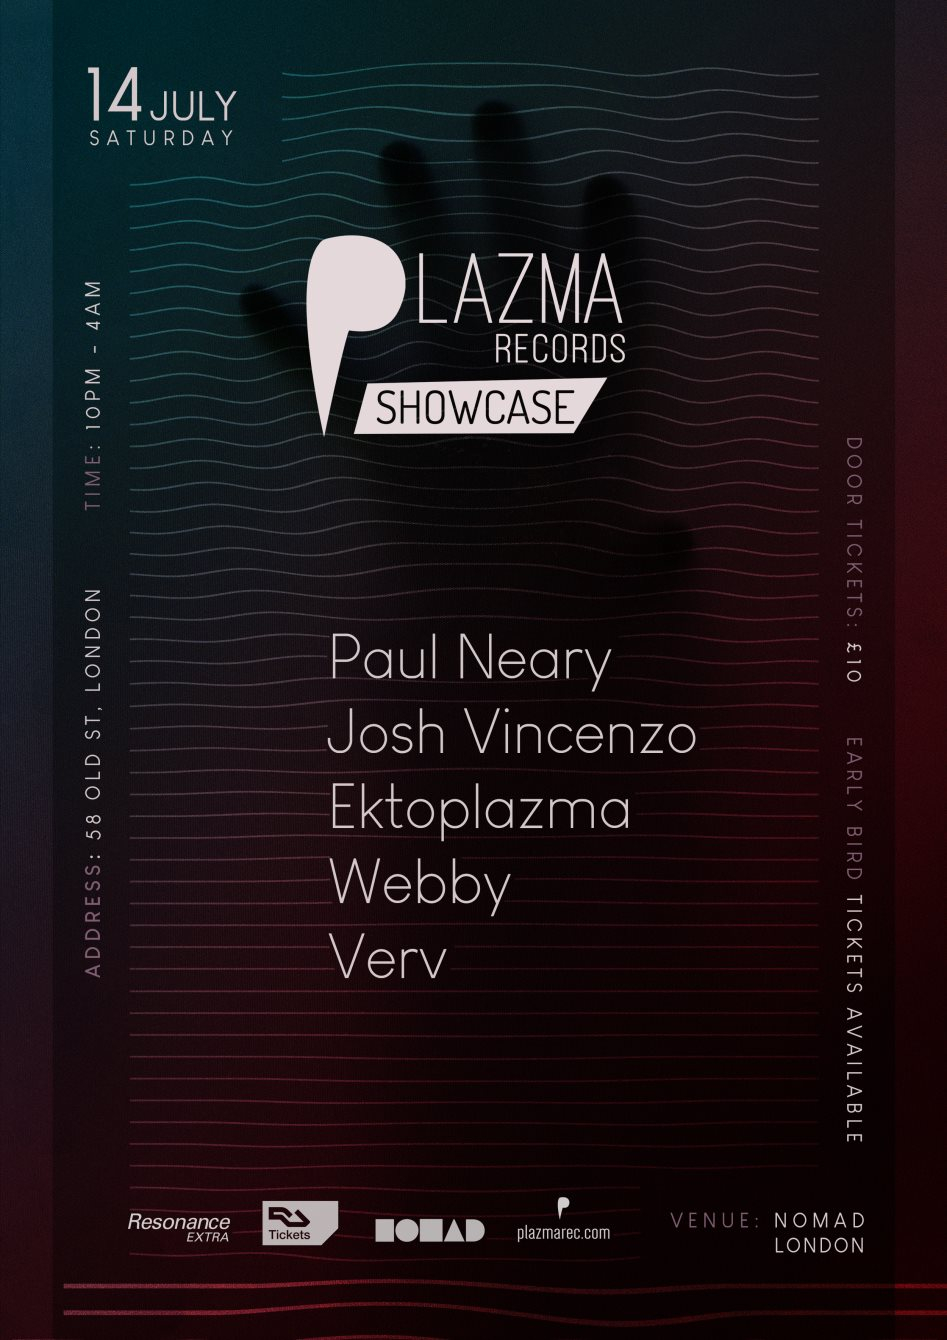 Plazma Records Showcase - Flyer front